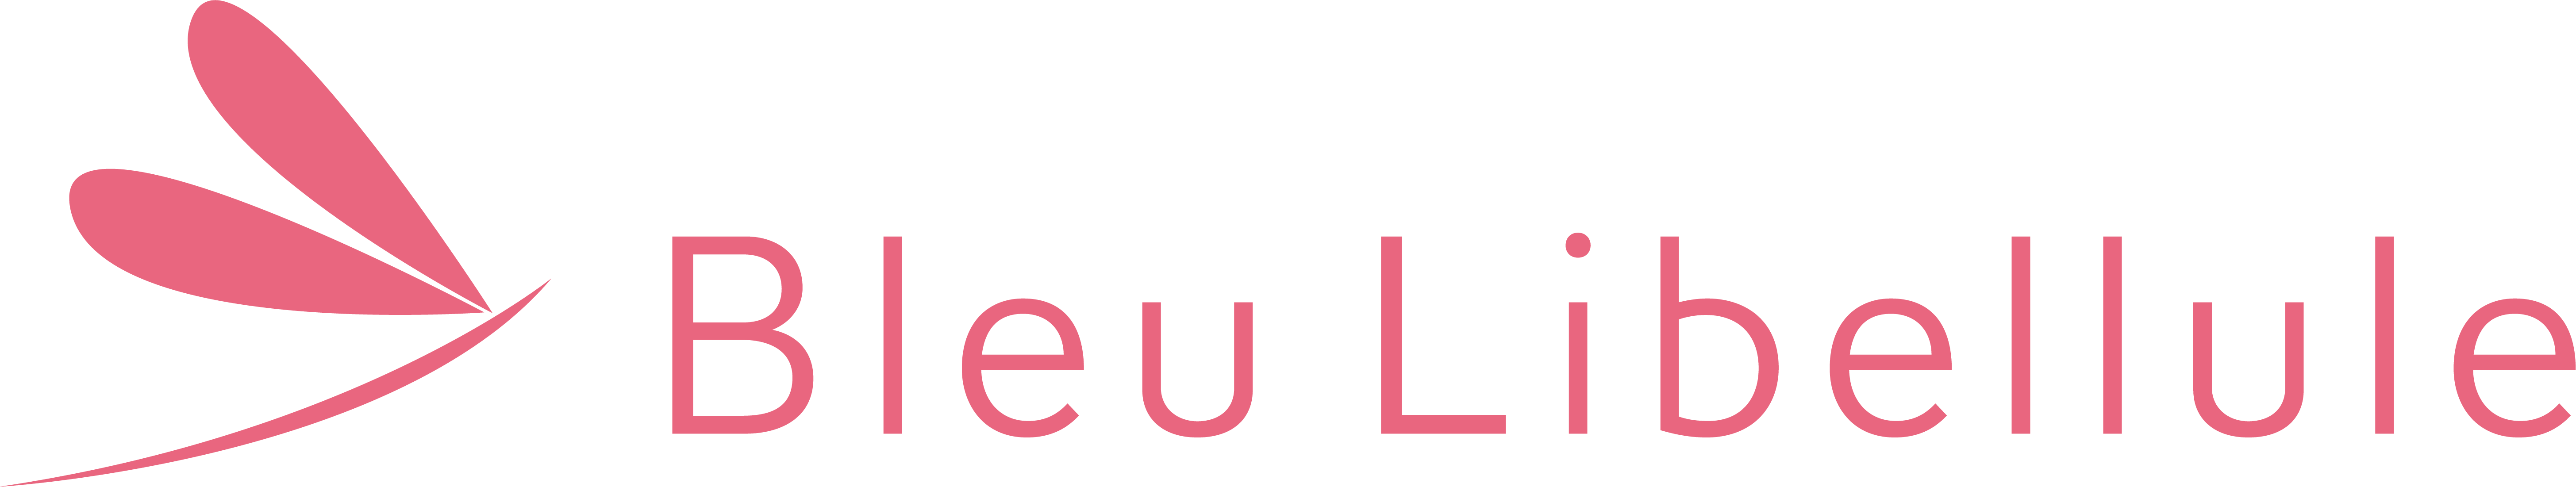 logo bleu libellule